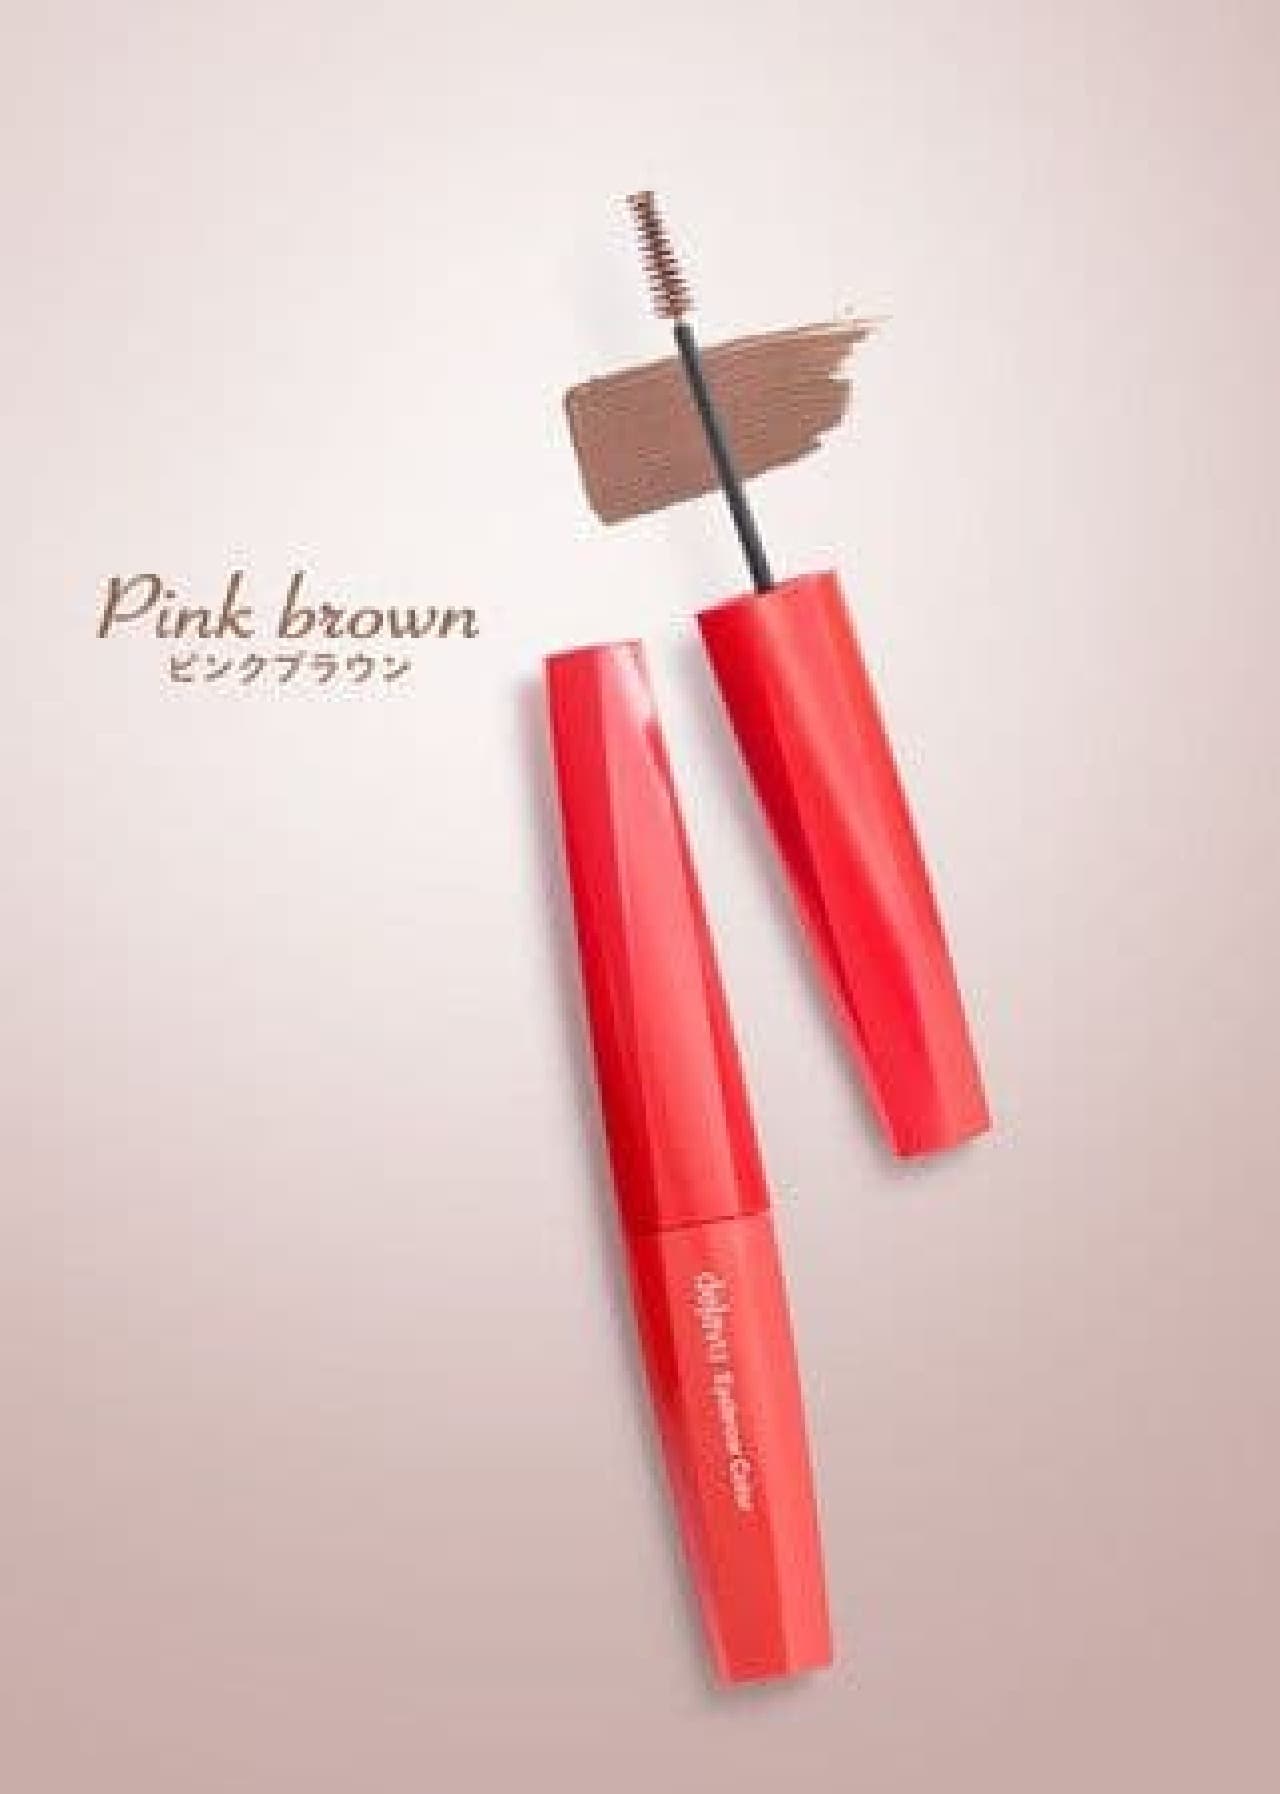 New color "Pink Brown" for "Déjà Vu Eyebrow Color